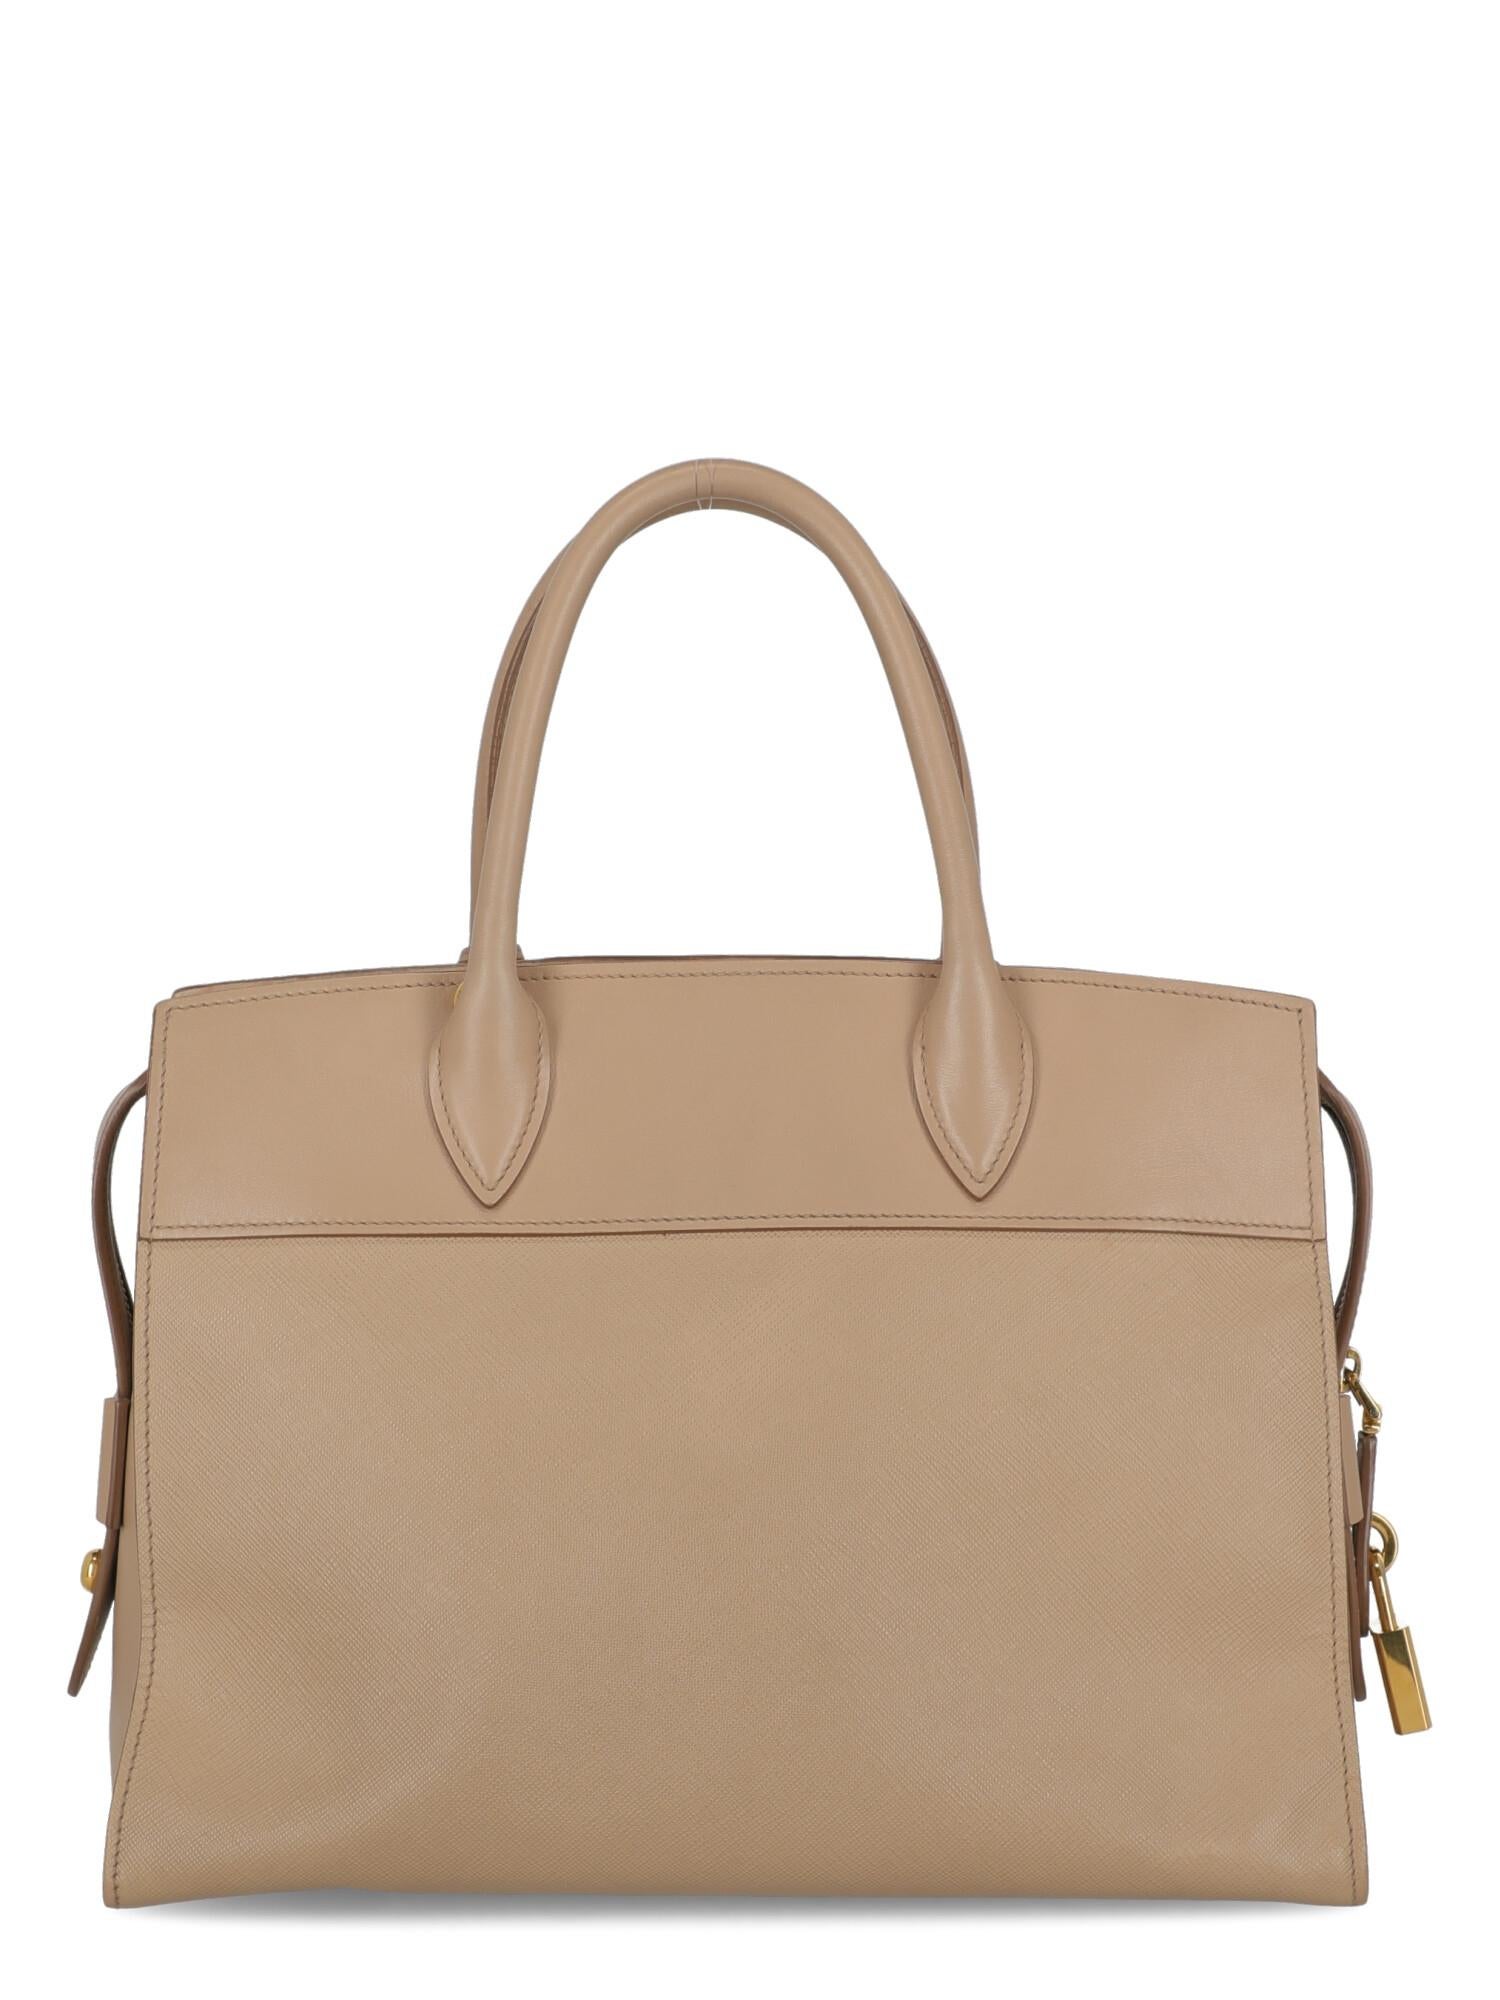 Prada Women's Handbag Esplanade Beige Leather For Sale 1